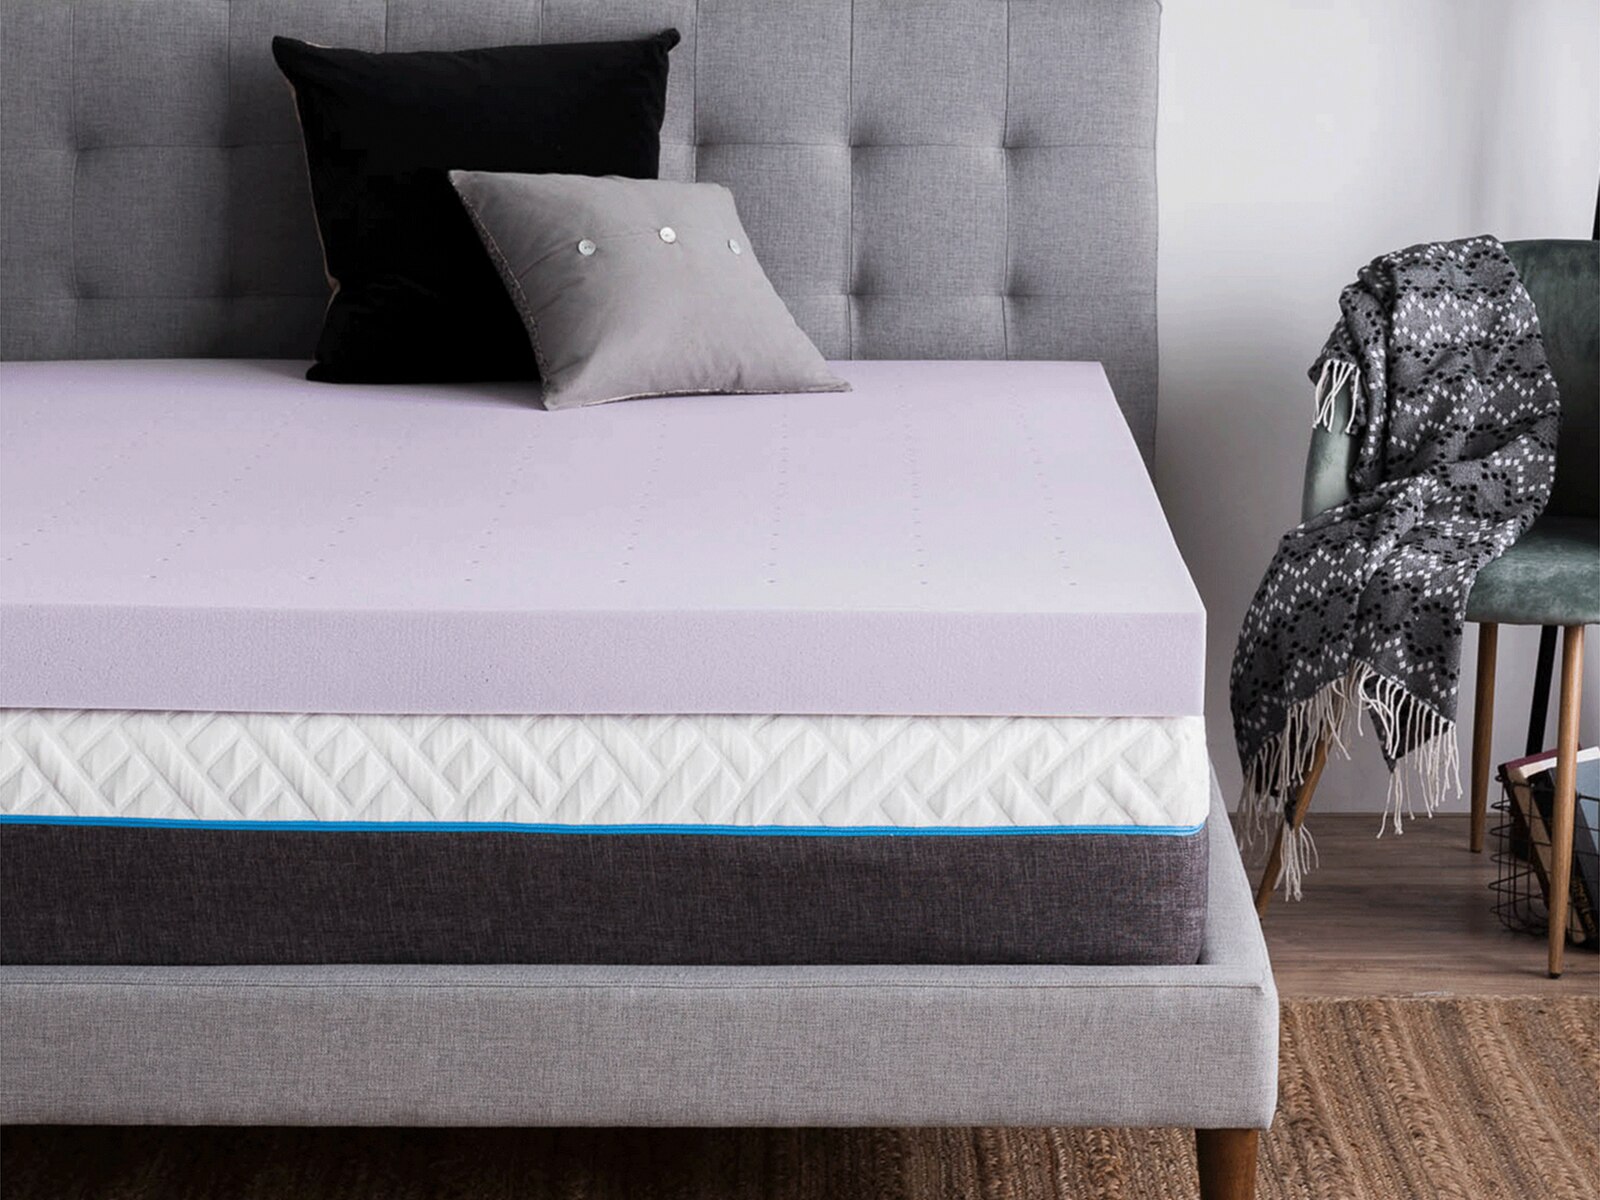 lucid 3-inch lavender memory foam mattress topper